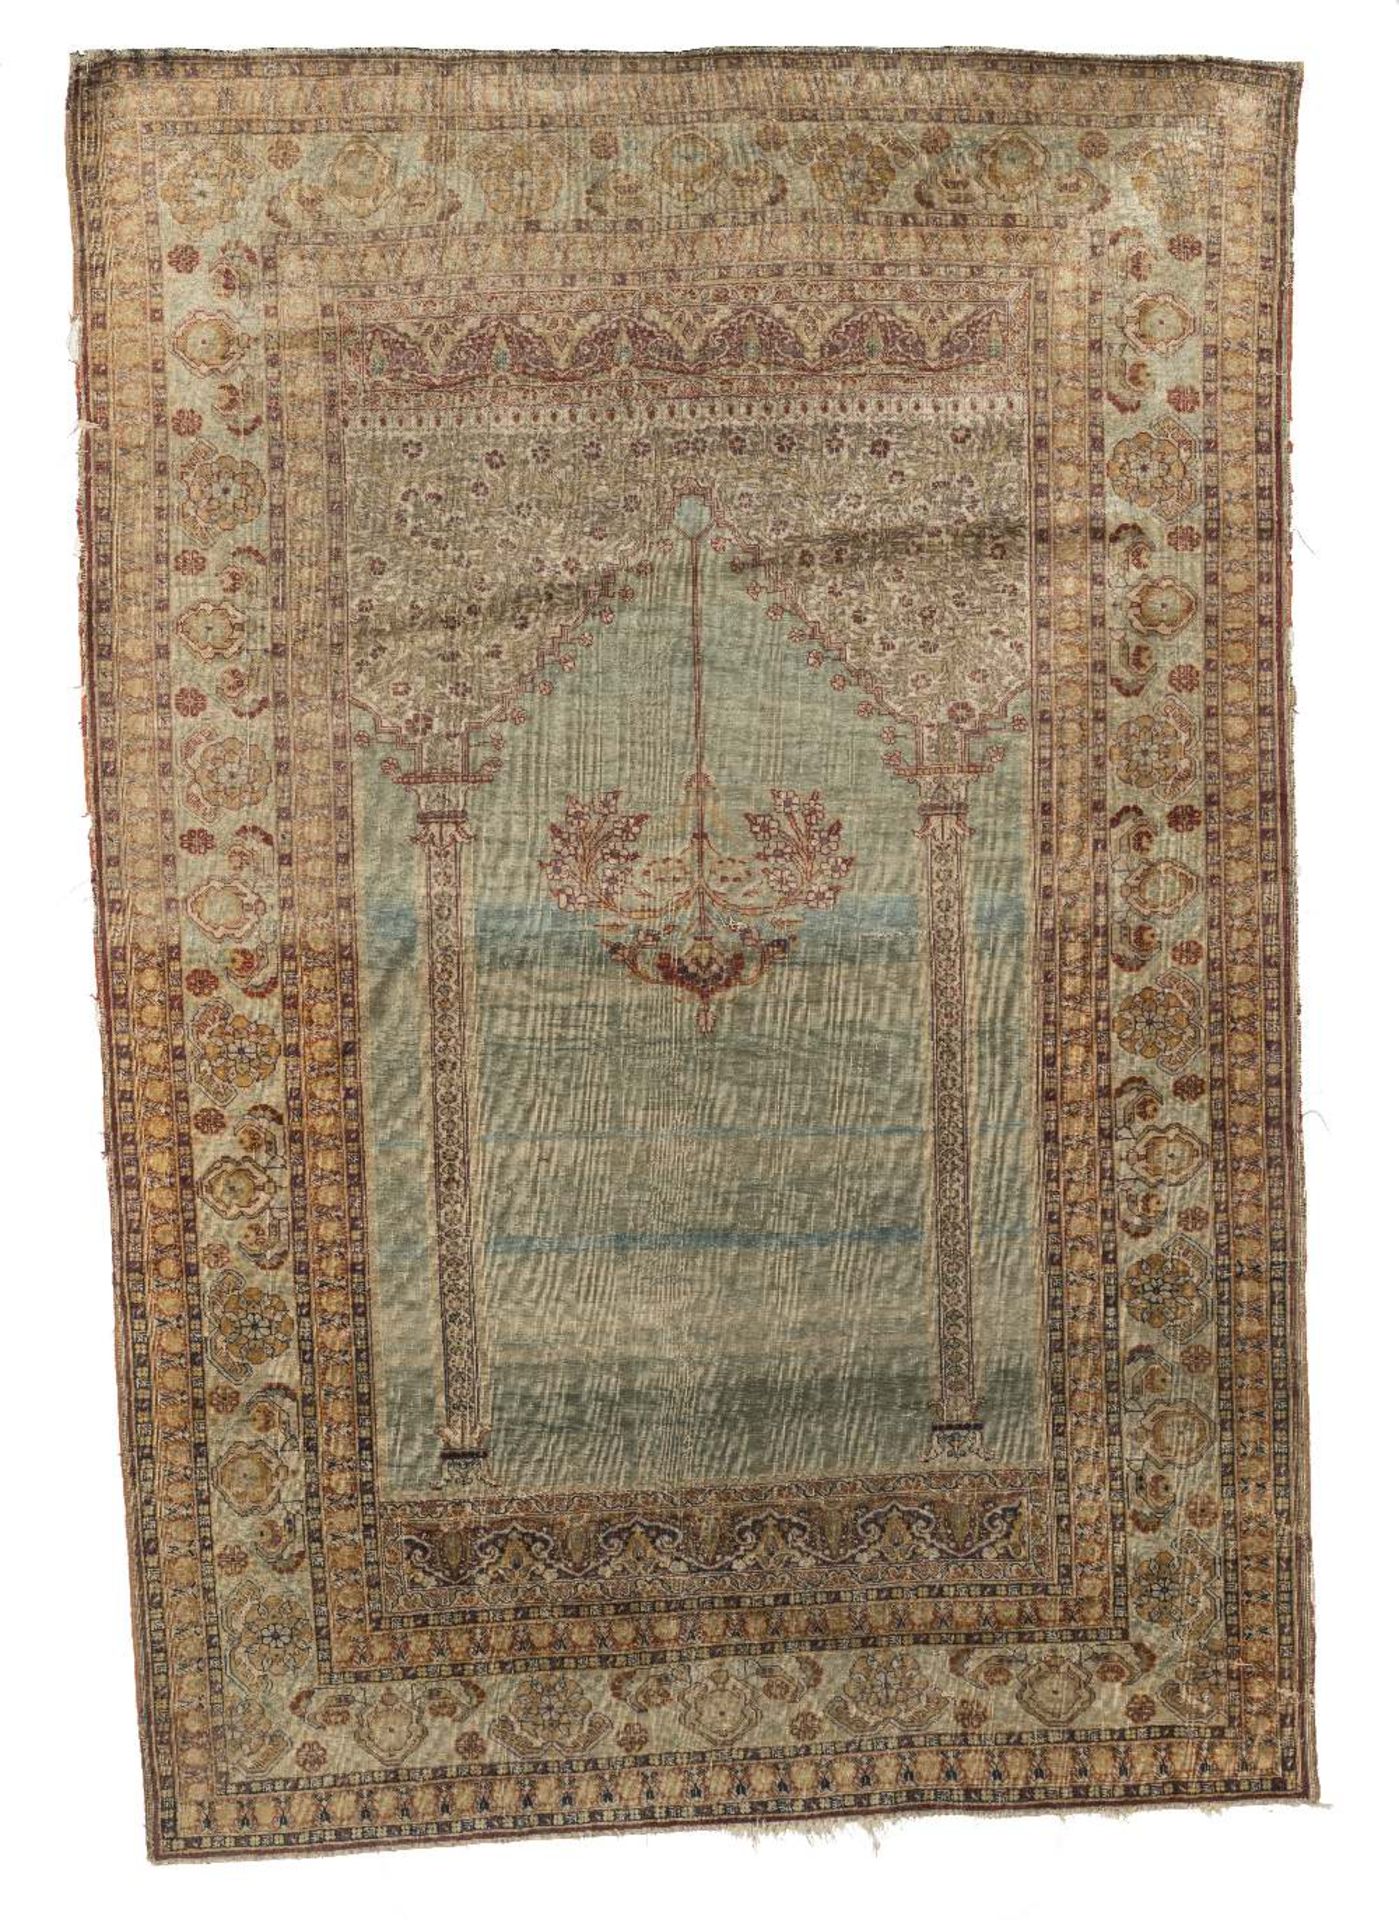 A TEKKE ENSI RUG West Turkestan 156cm long x 123cm wide (61in long x 48in wide), the silk rug 172... - Bild 2 aus 2